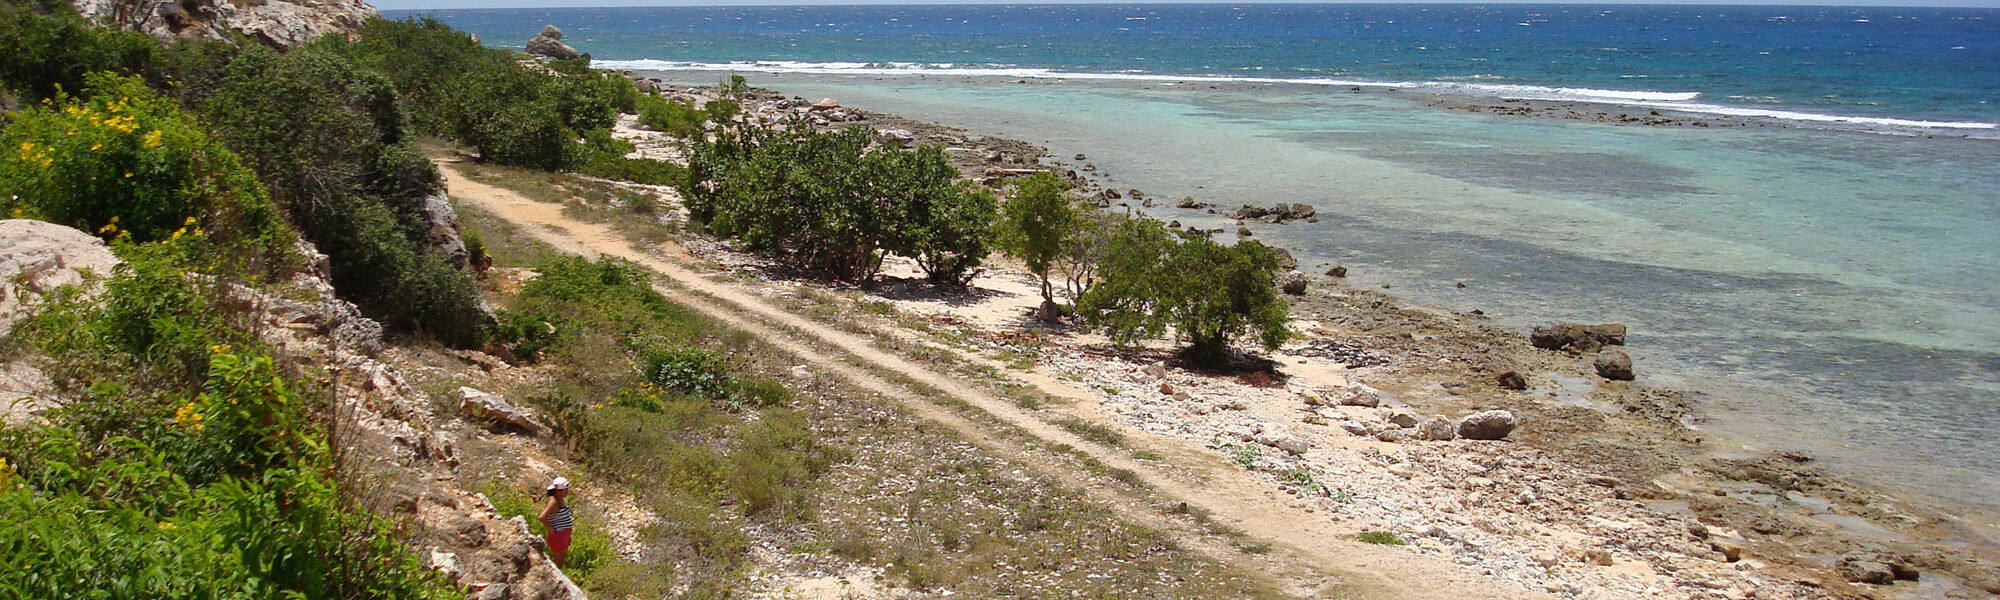 Cabo Cruz - Parque Nacional Desembarco del Granma - Cuba